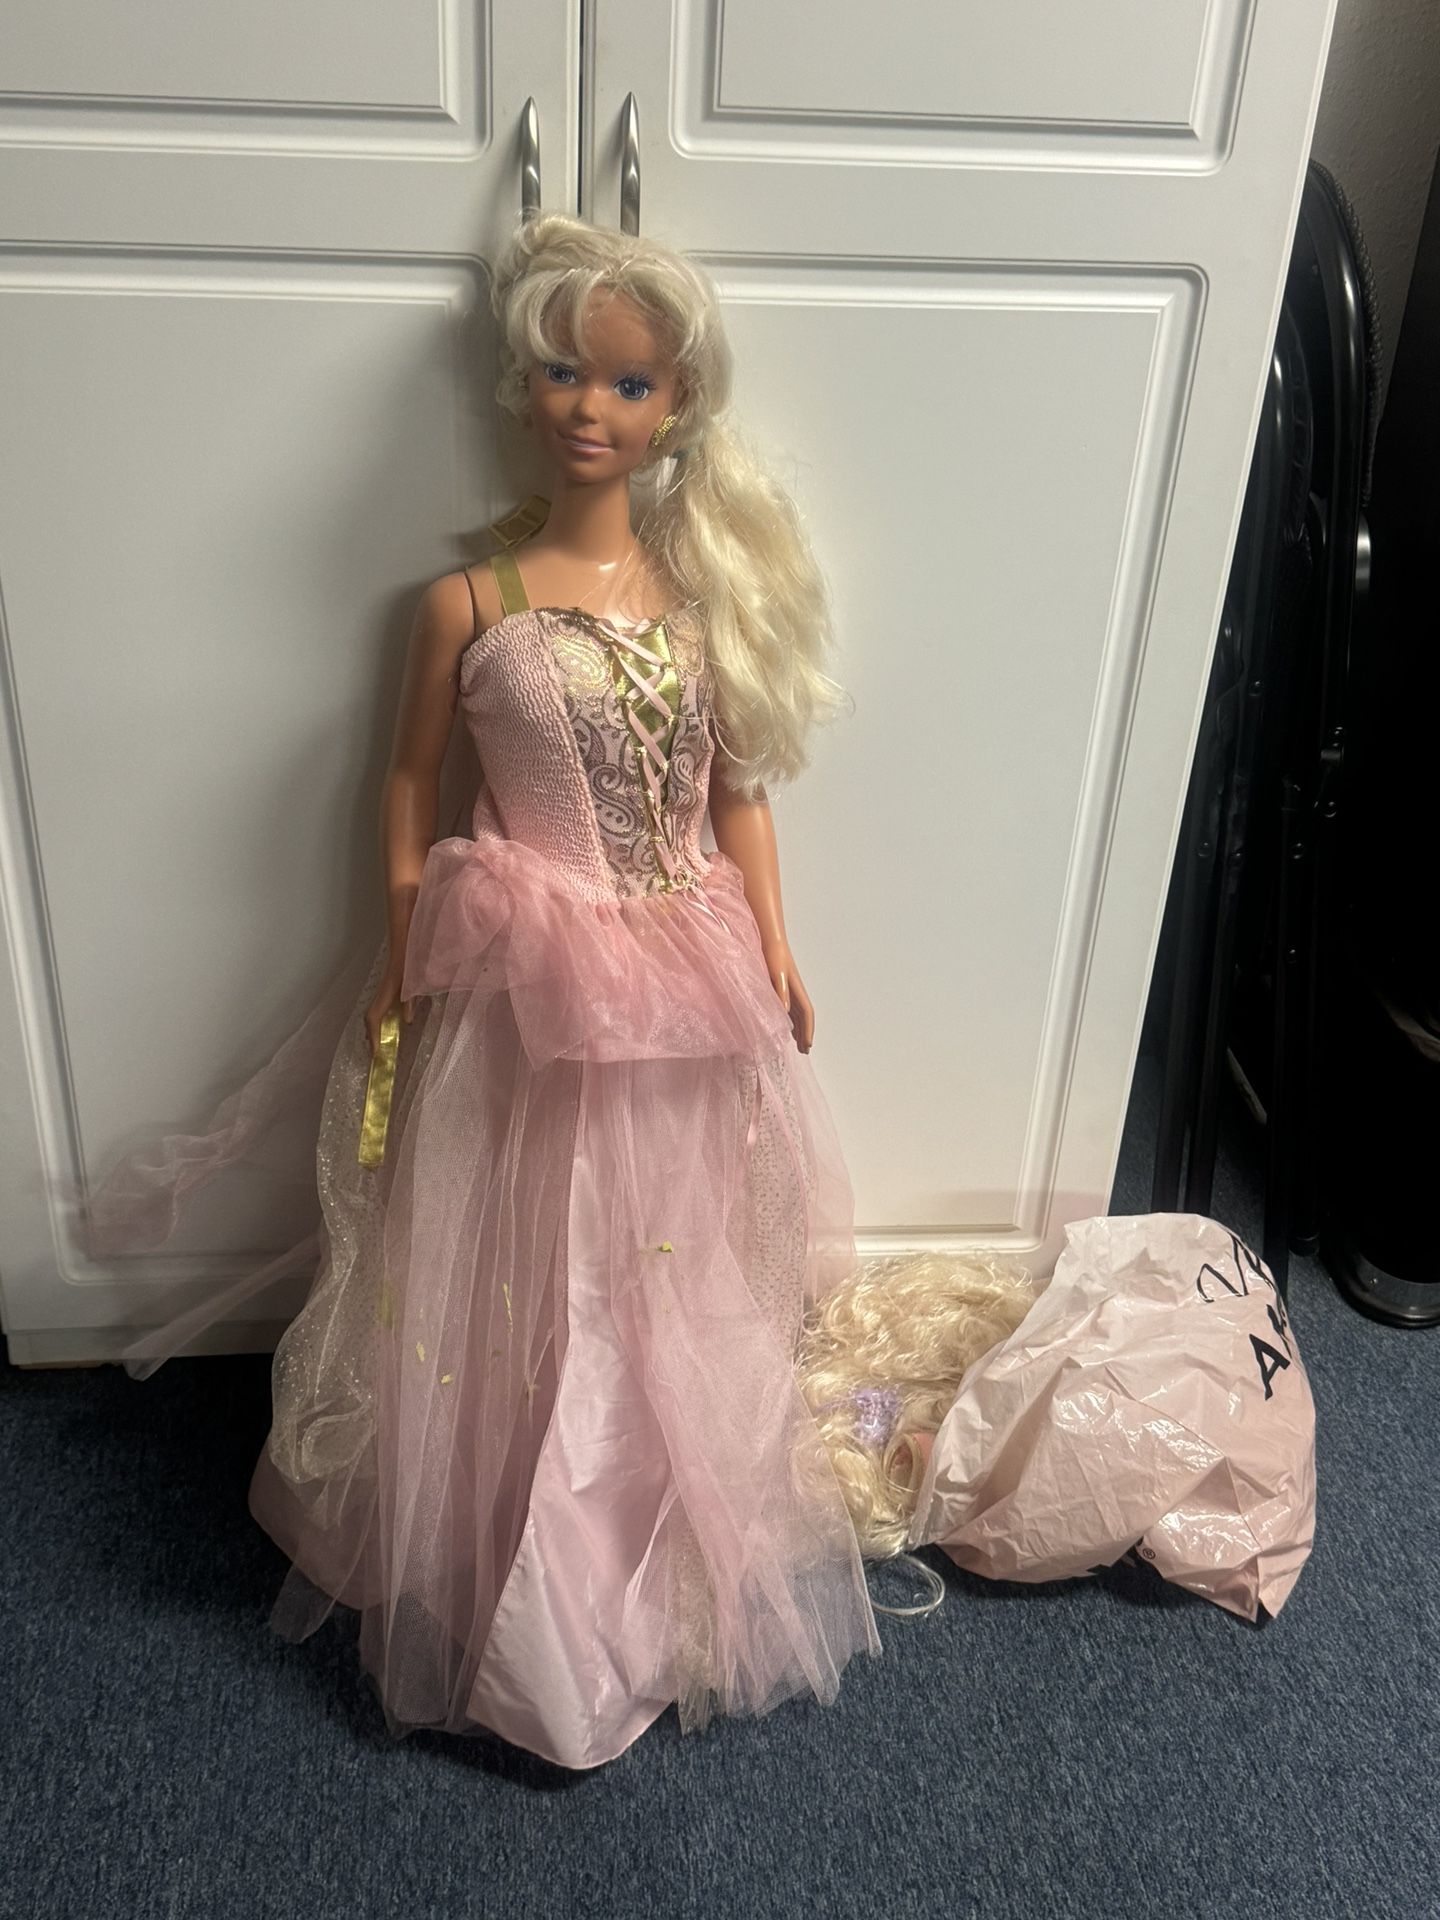 My Life Size Barbie Doll